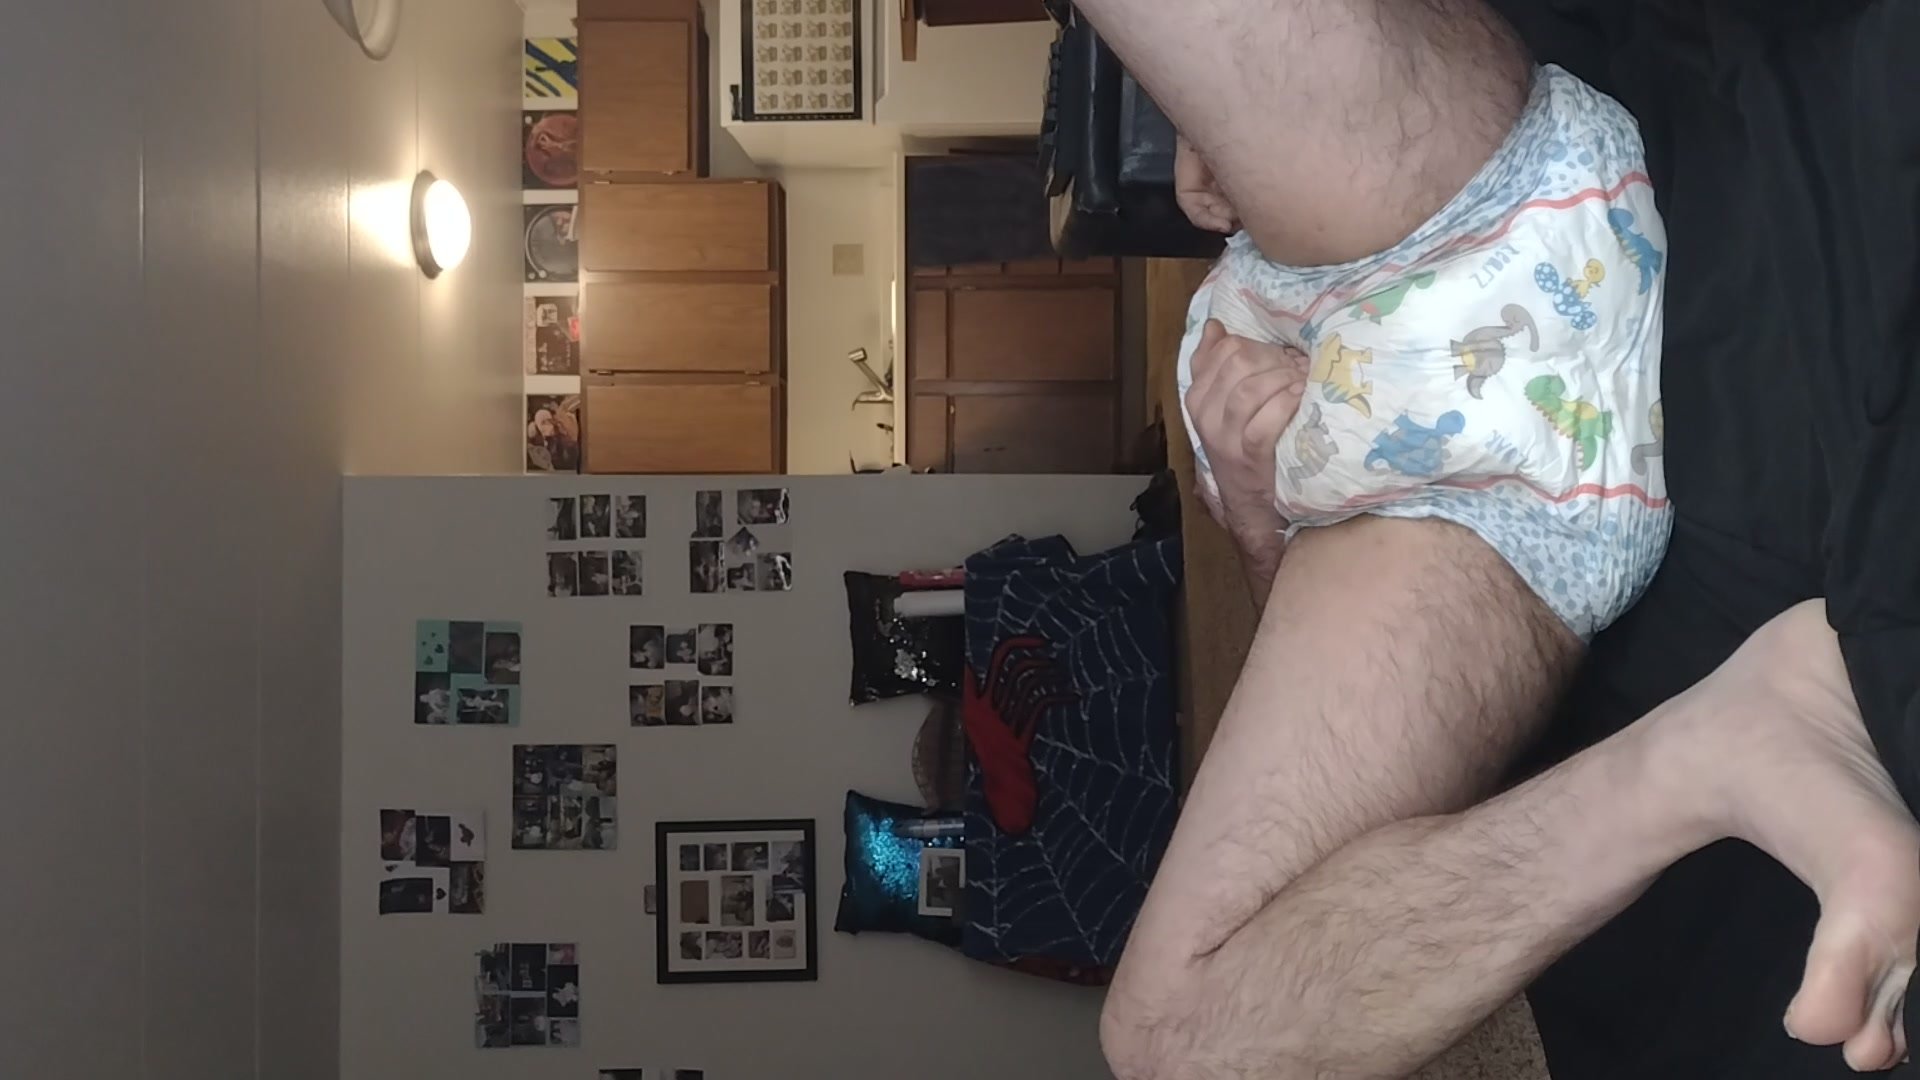 Messy diaper 1 - video 3